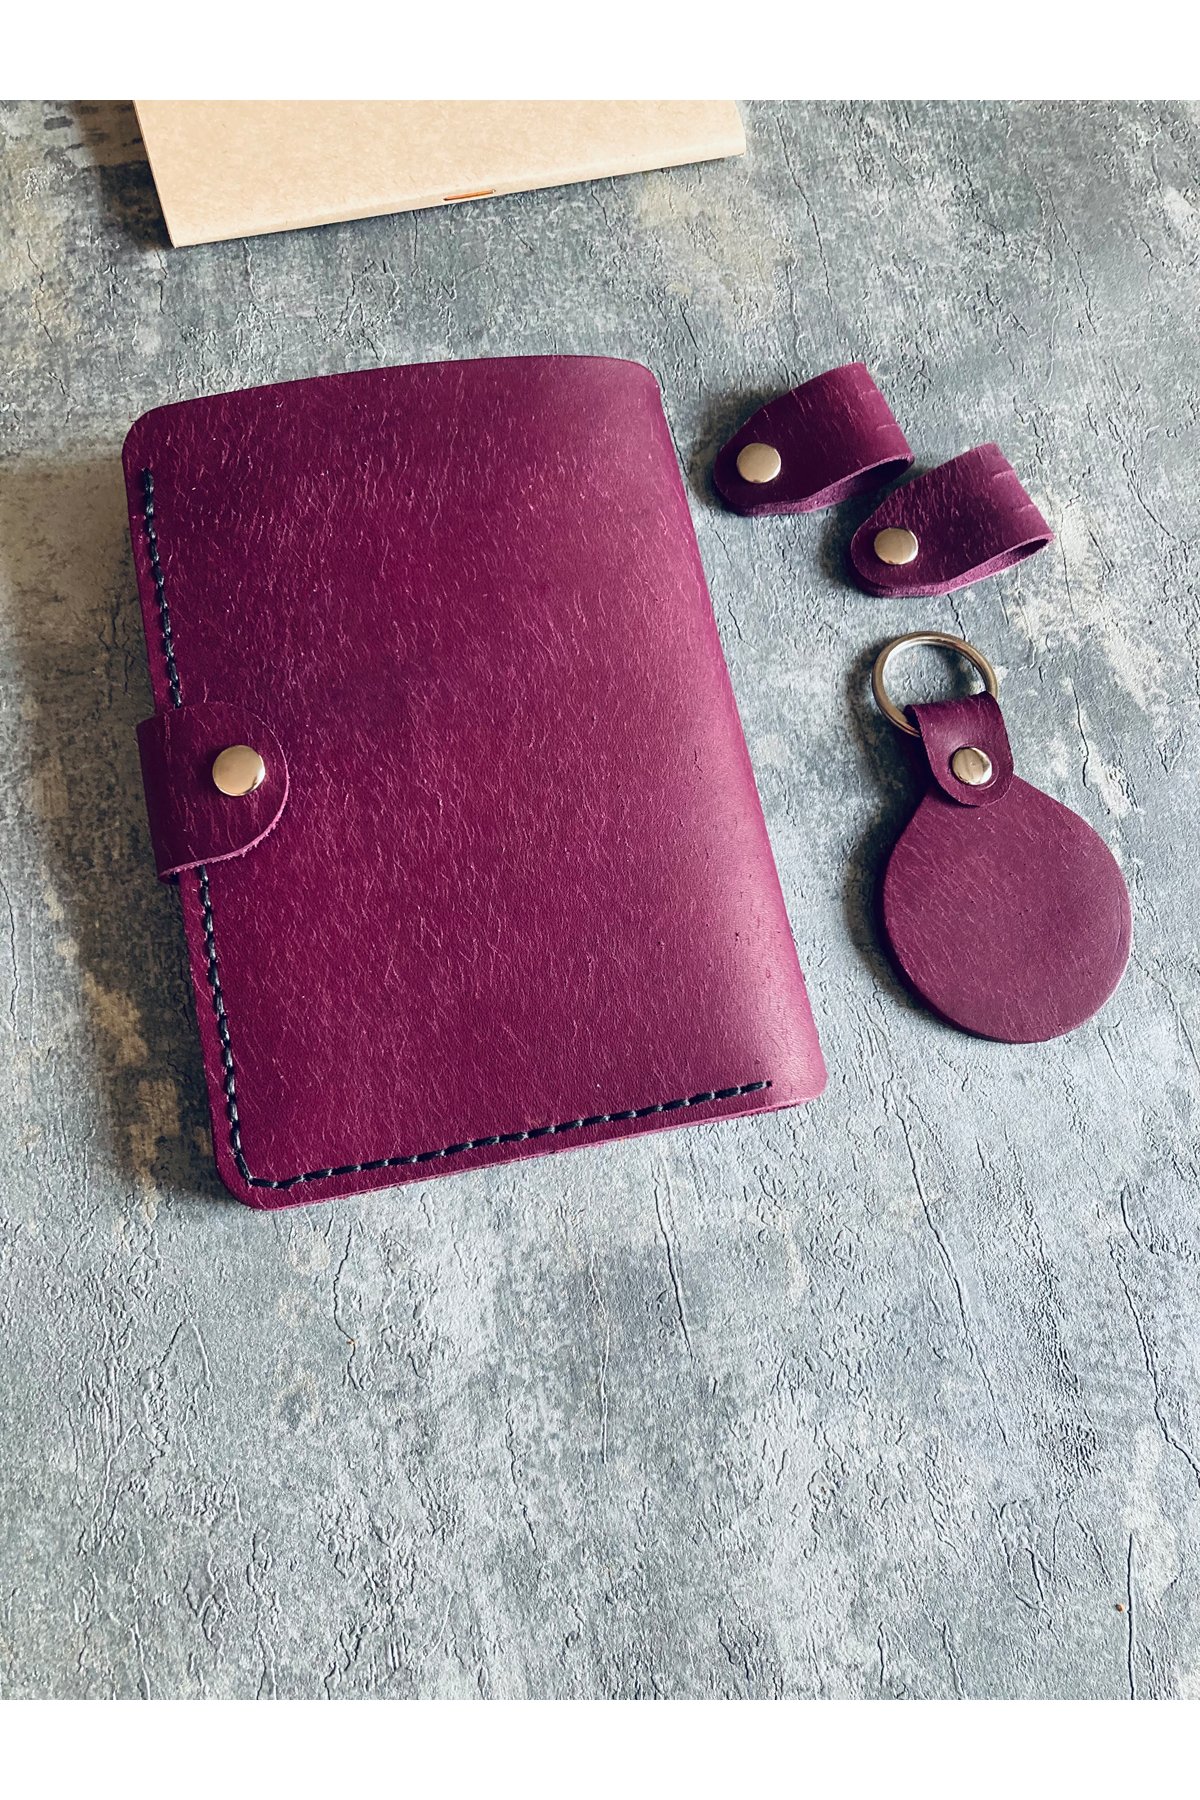 Set of 4 Passport Cover Set - Purple Leather | Bretya Leather